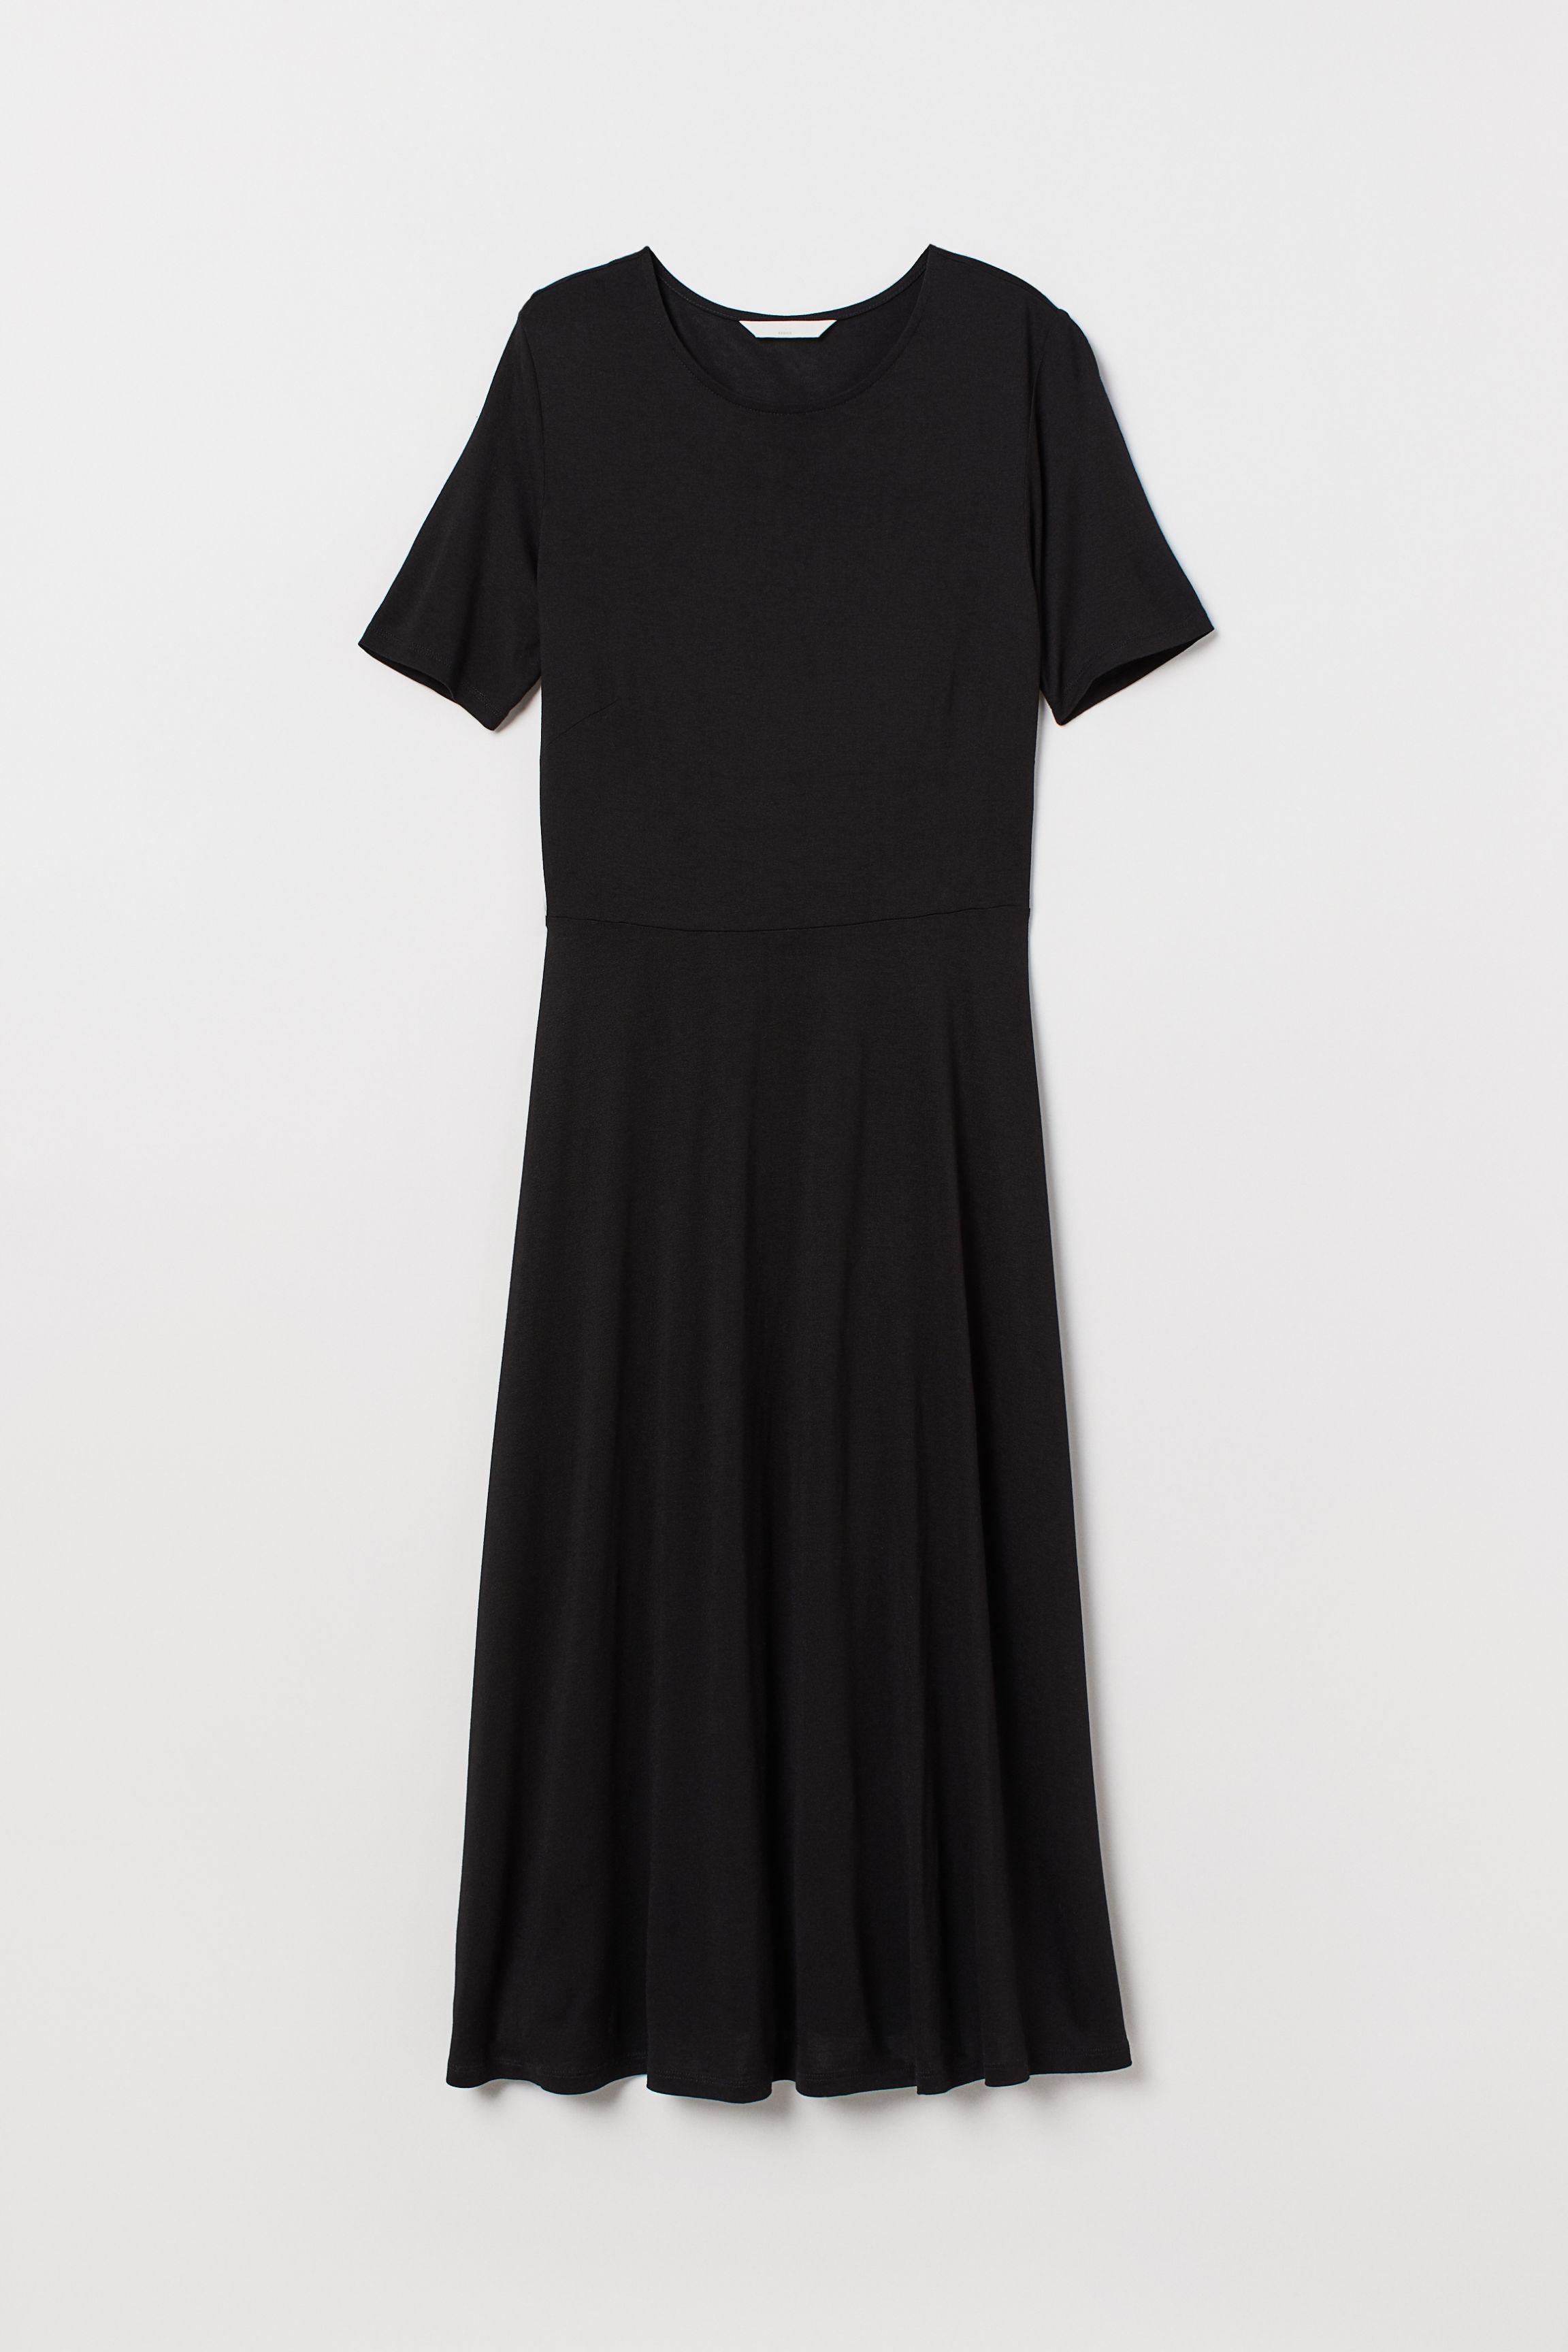 H&M Calf-length Jersey Dress in Black - Lyst